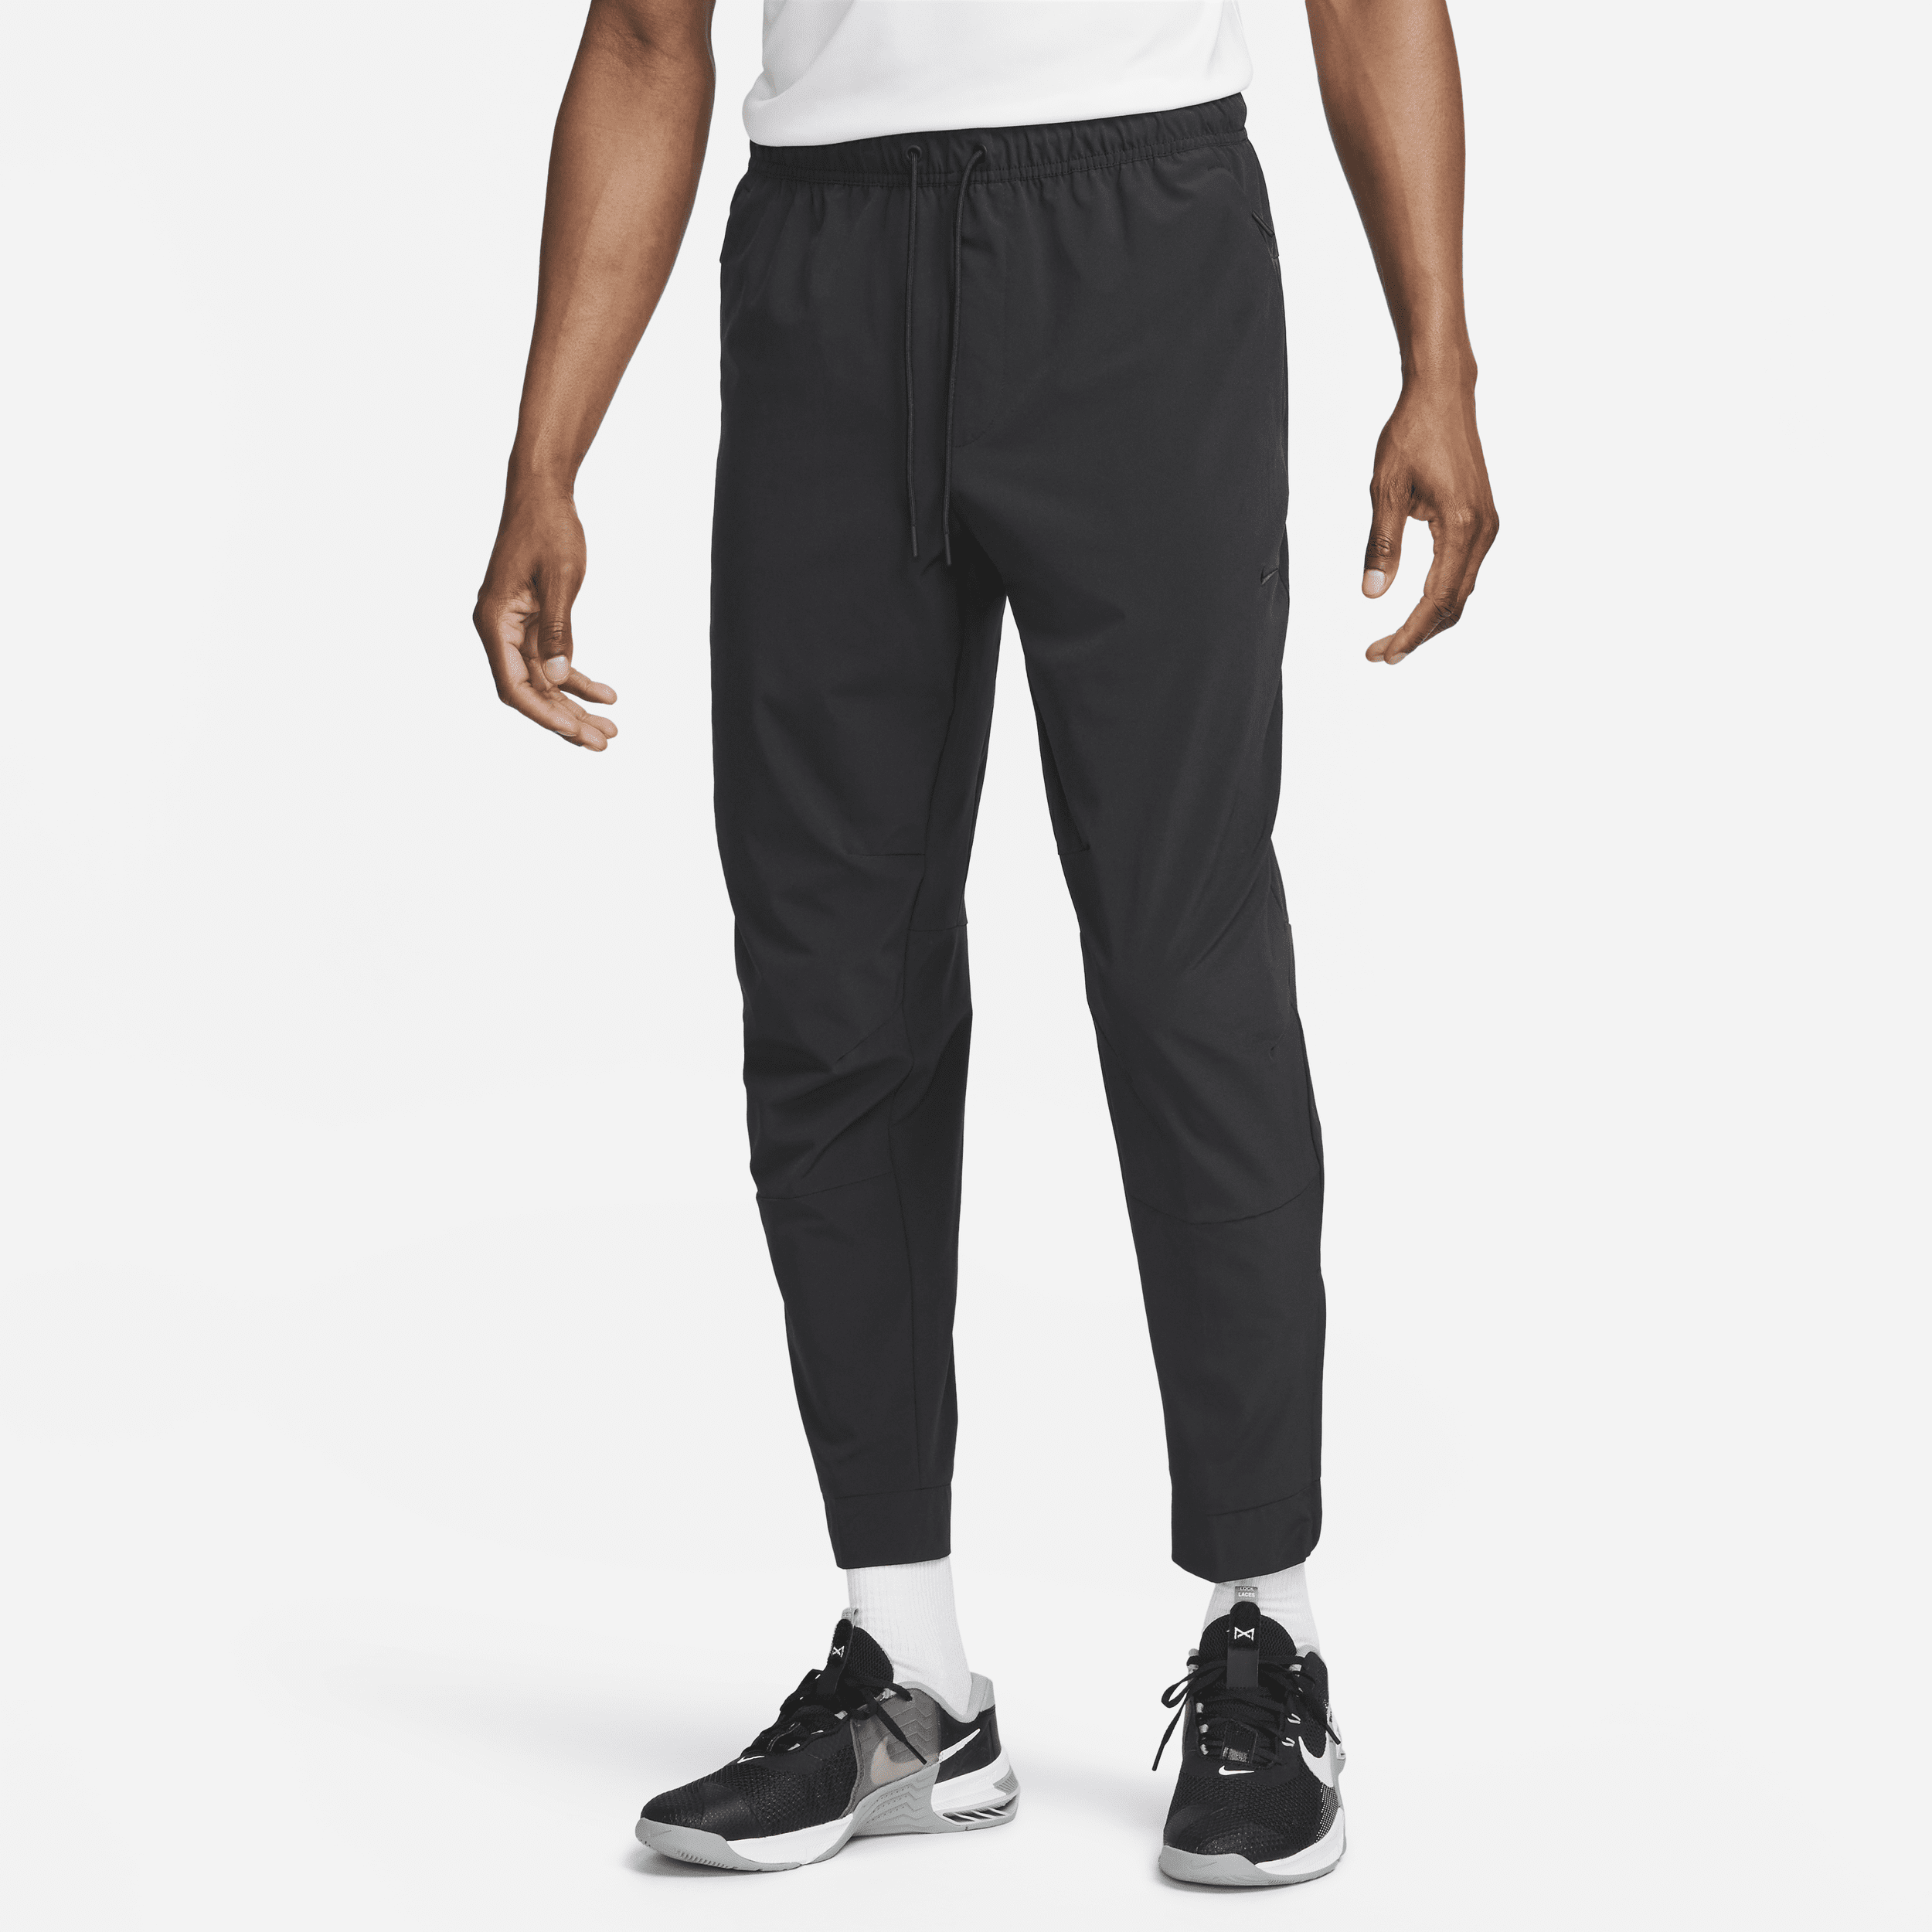 Nike Unlimited Dri-FIT veelzijdige herenbroek met ritsboord - Zwart